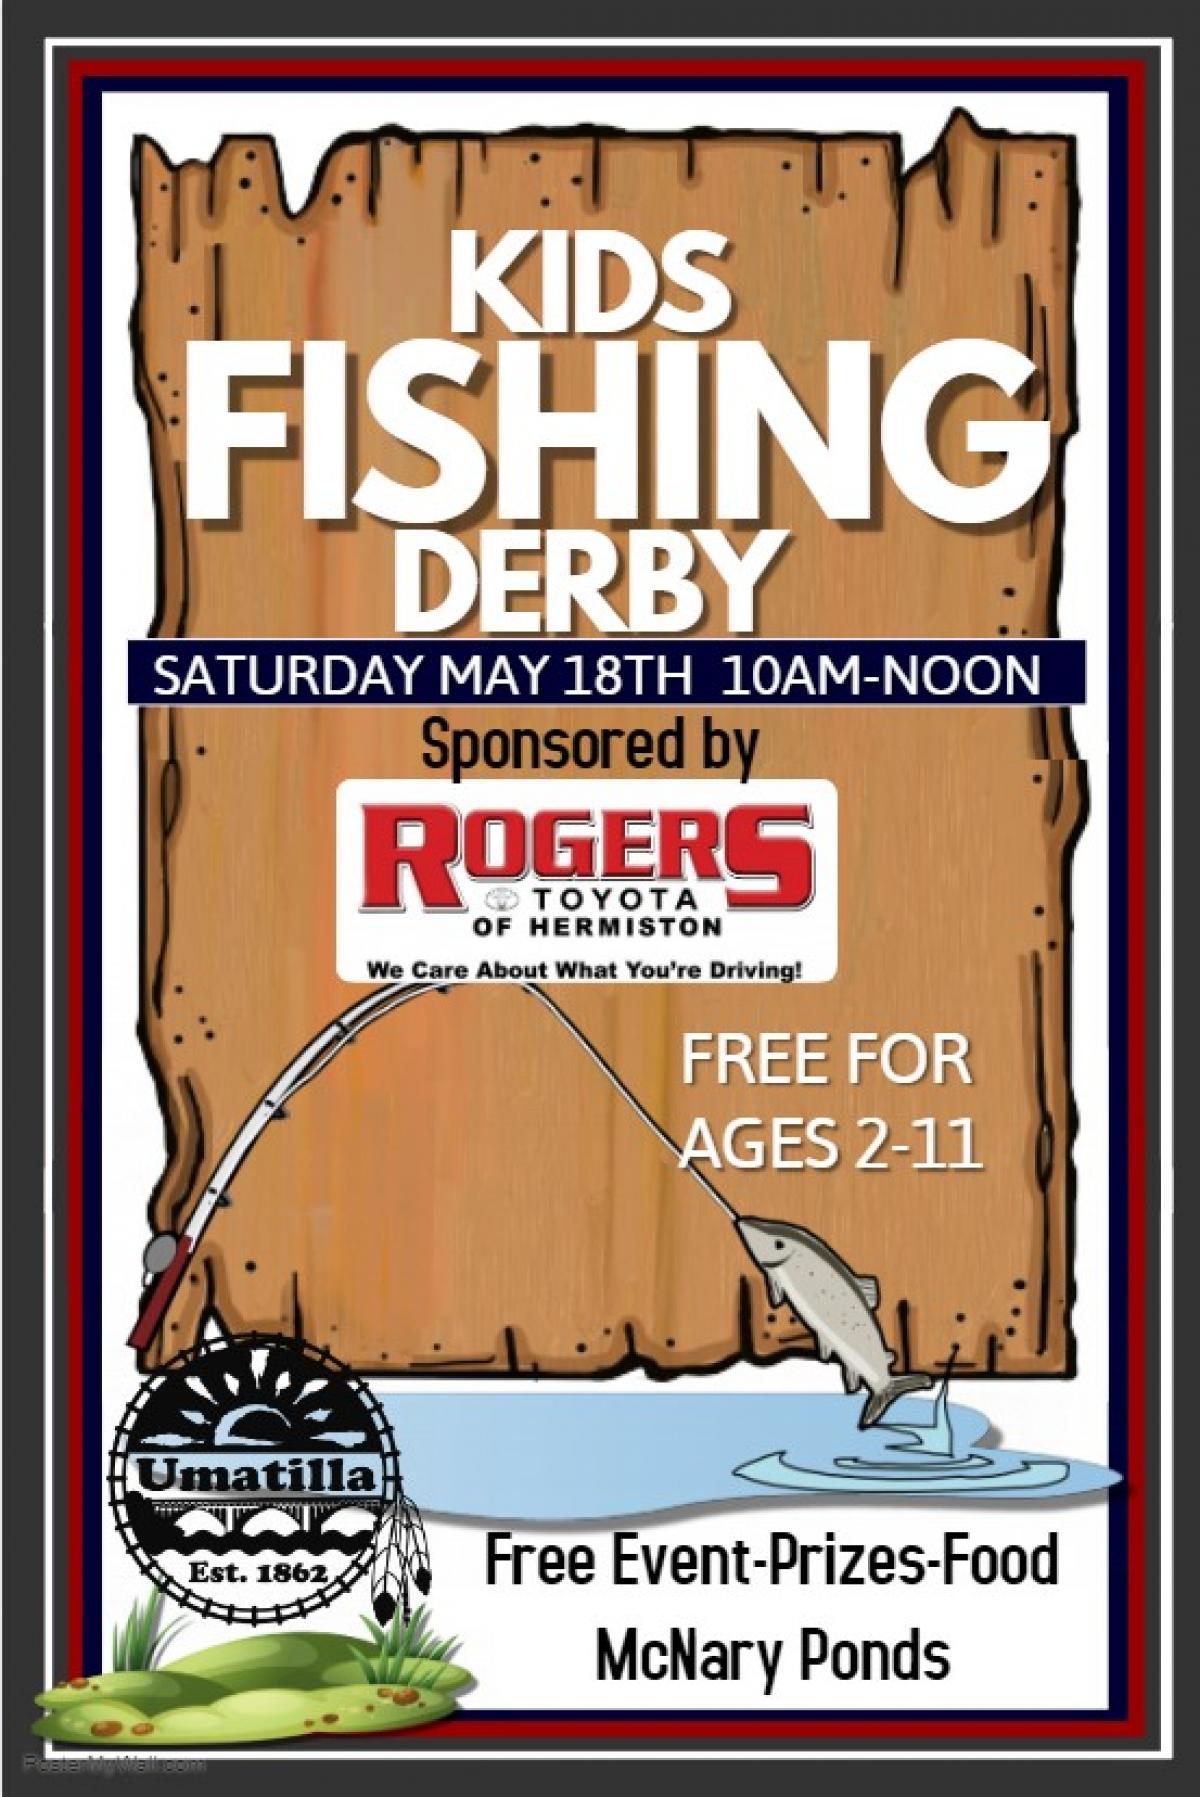 FREE KID'S FISHING DERBY